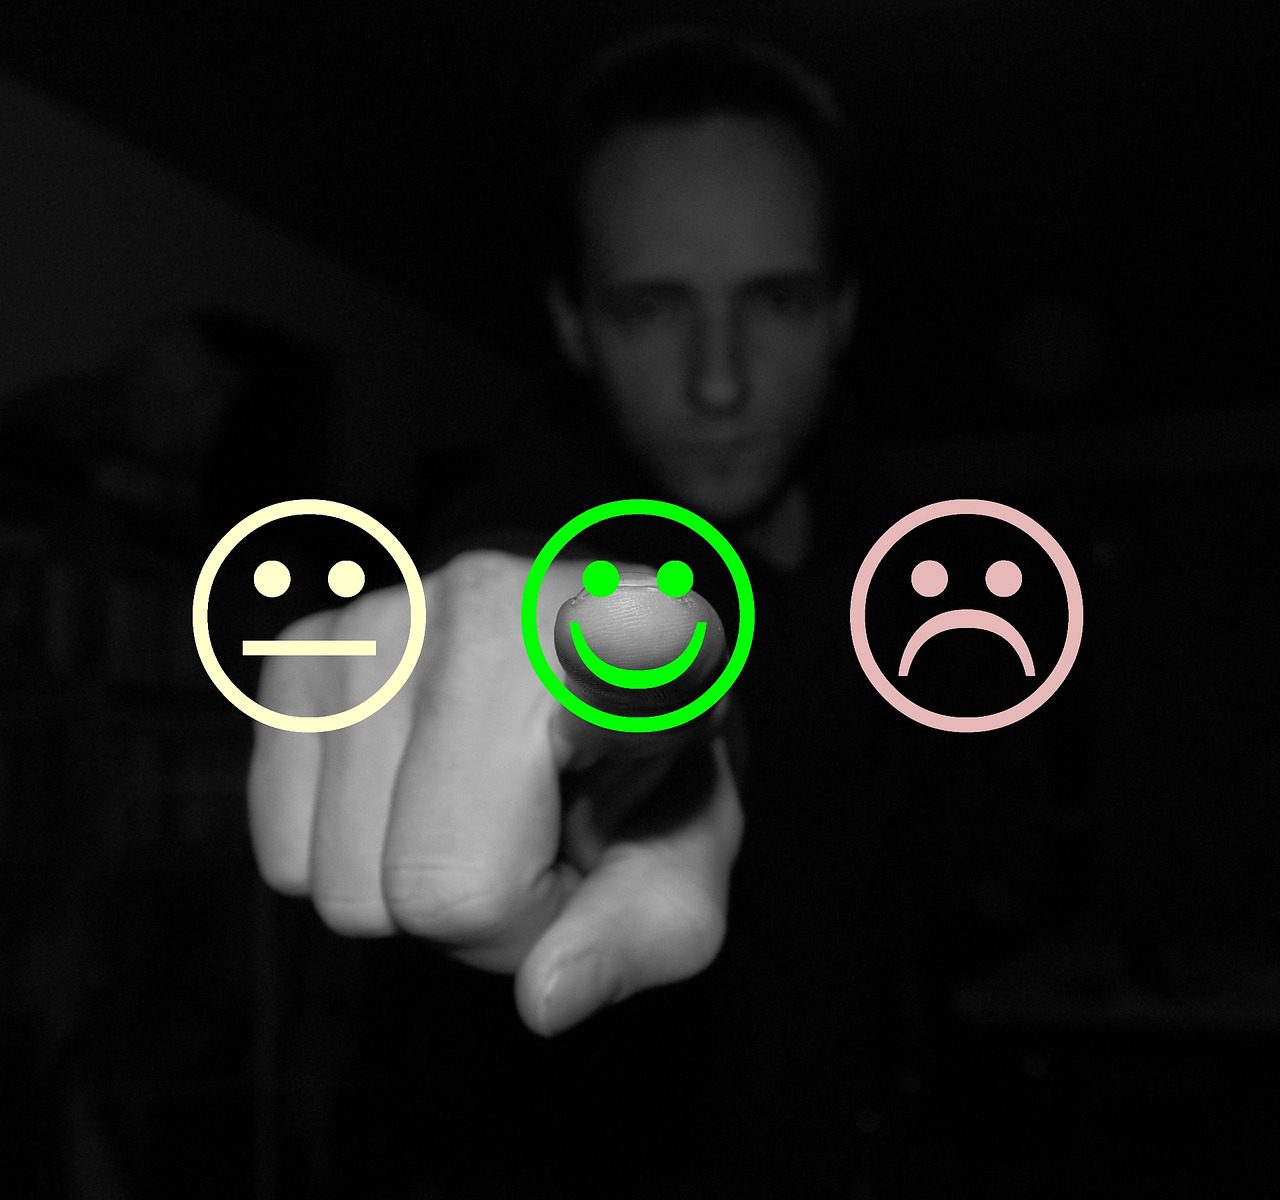 ways to get event feedback - emoji buttons